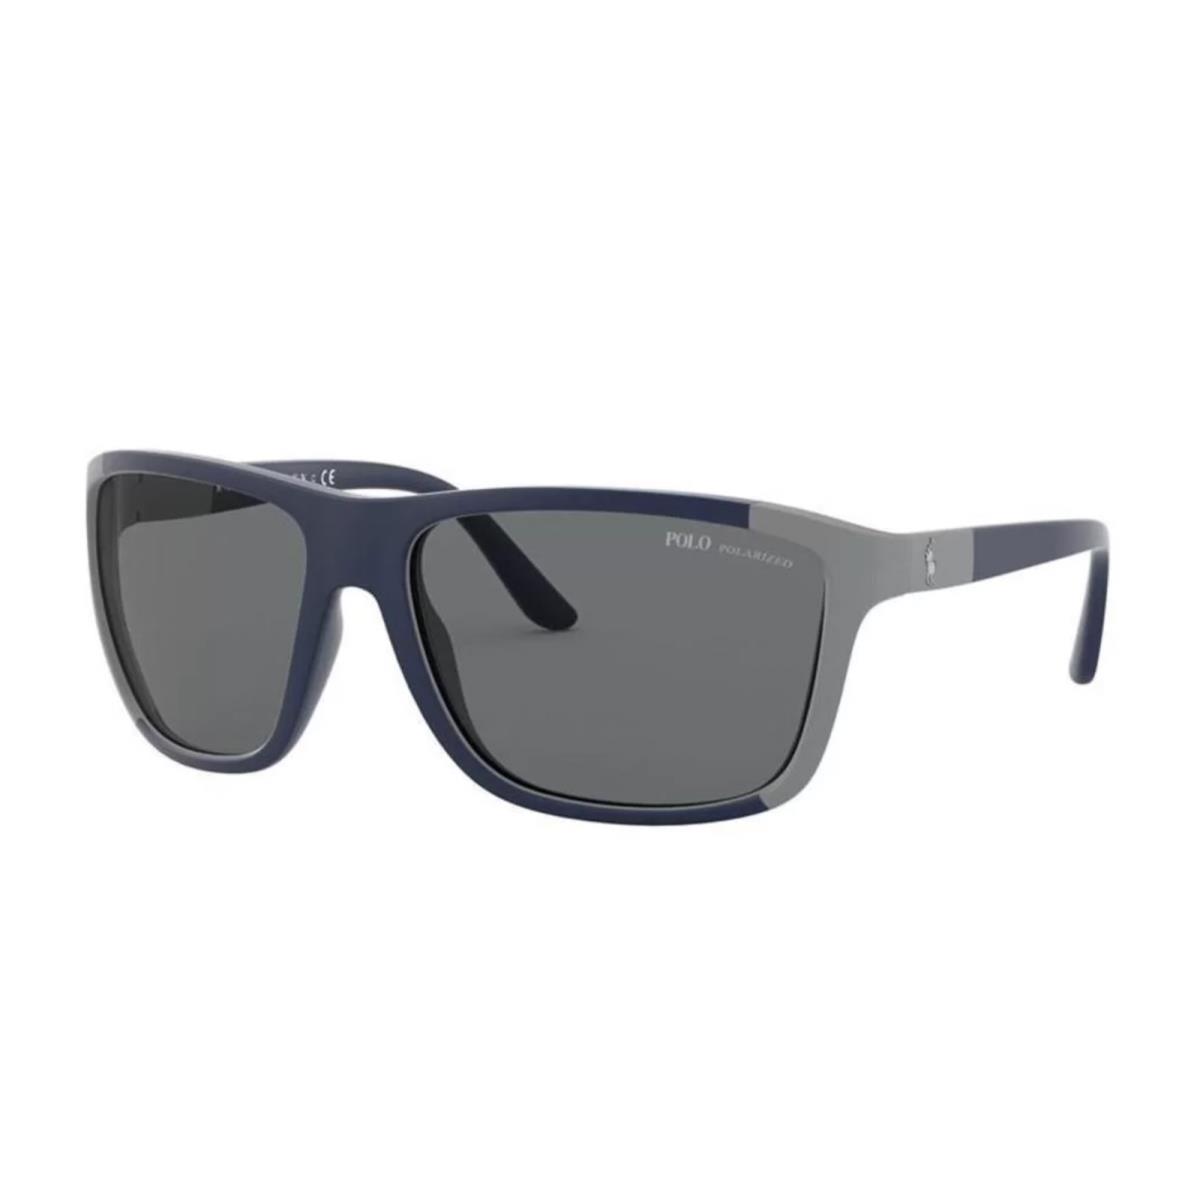 Polo Ralph Lauren PH 4155 5810/81 Gray Blue Polarized Sunglasses 62-16-130MM